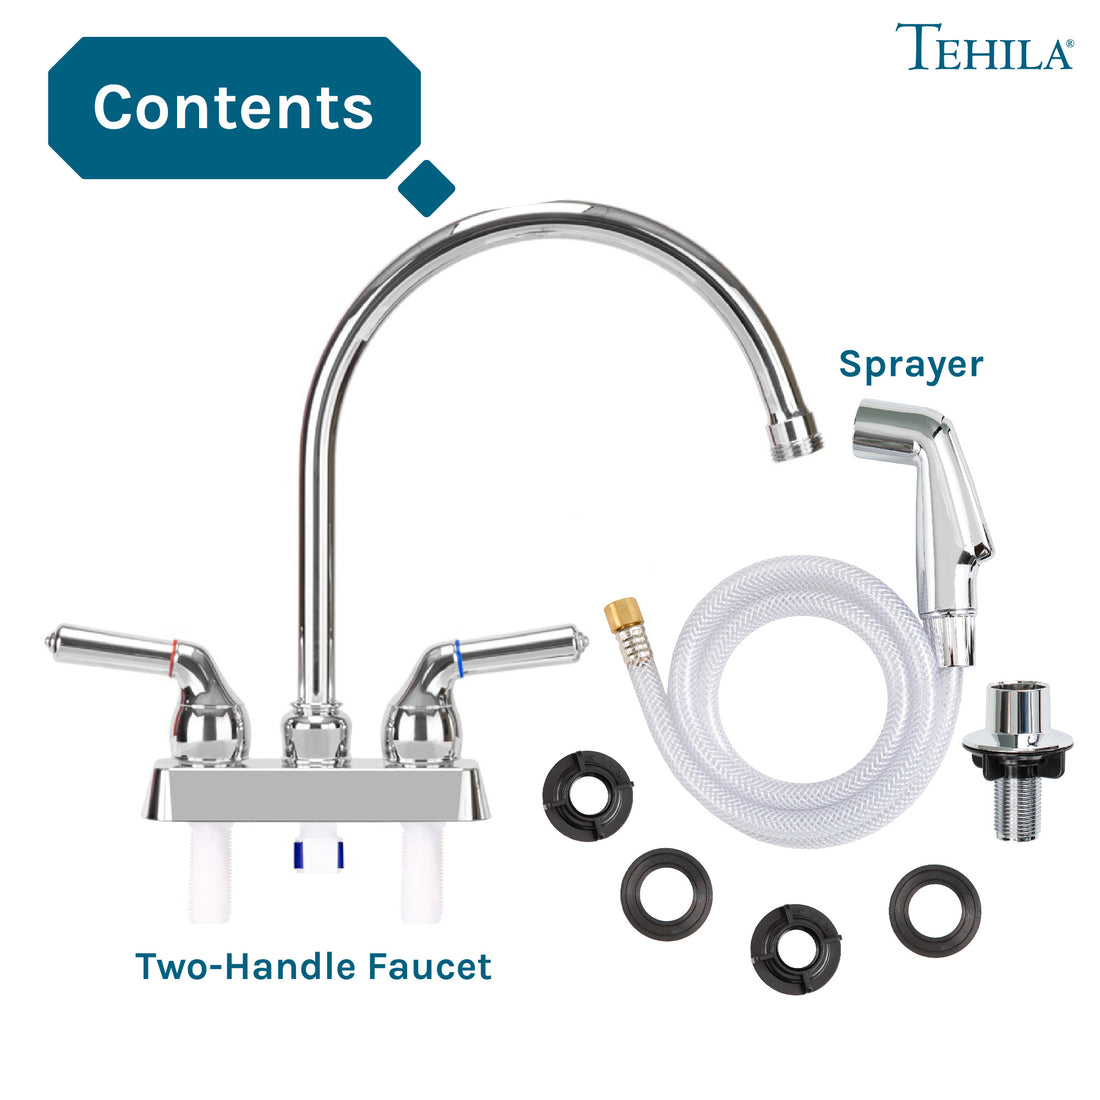 Tehila Chrome Finish Gooseneck Faucet with Side Sprayer - Utility sinks vanites Tehila